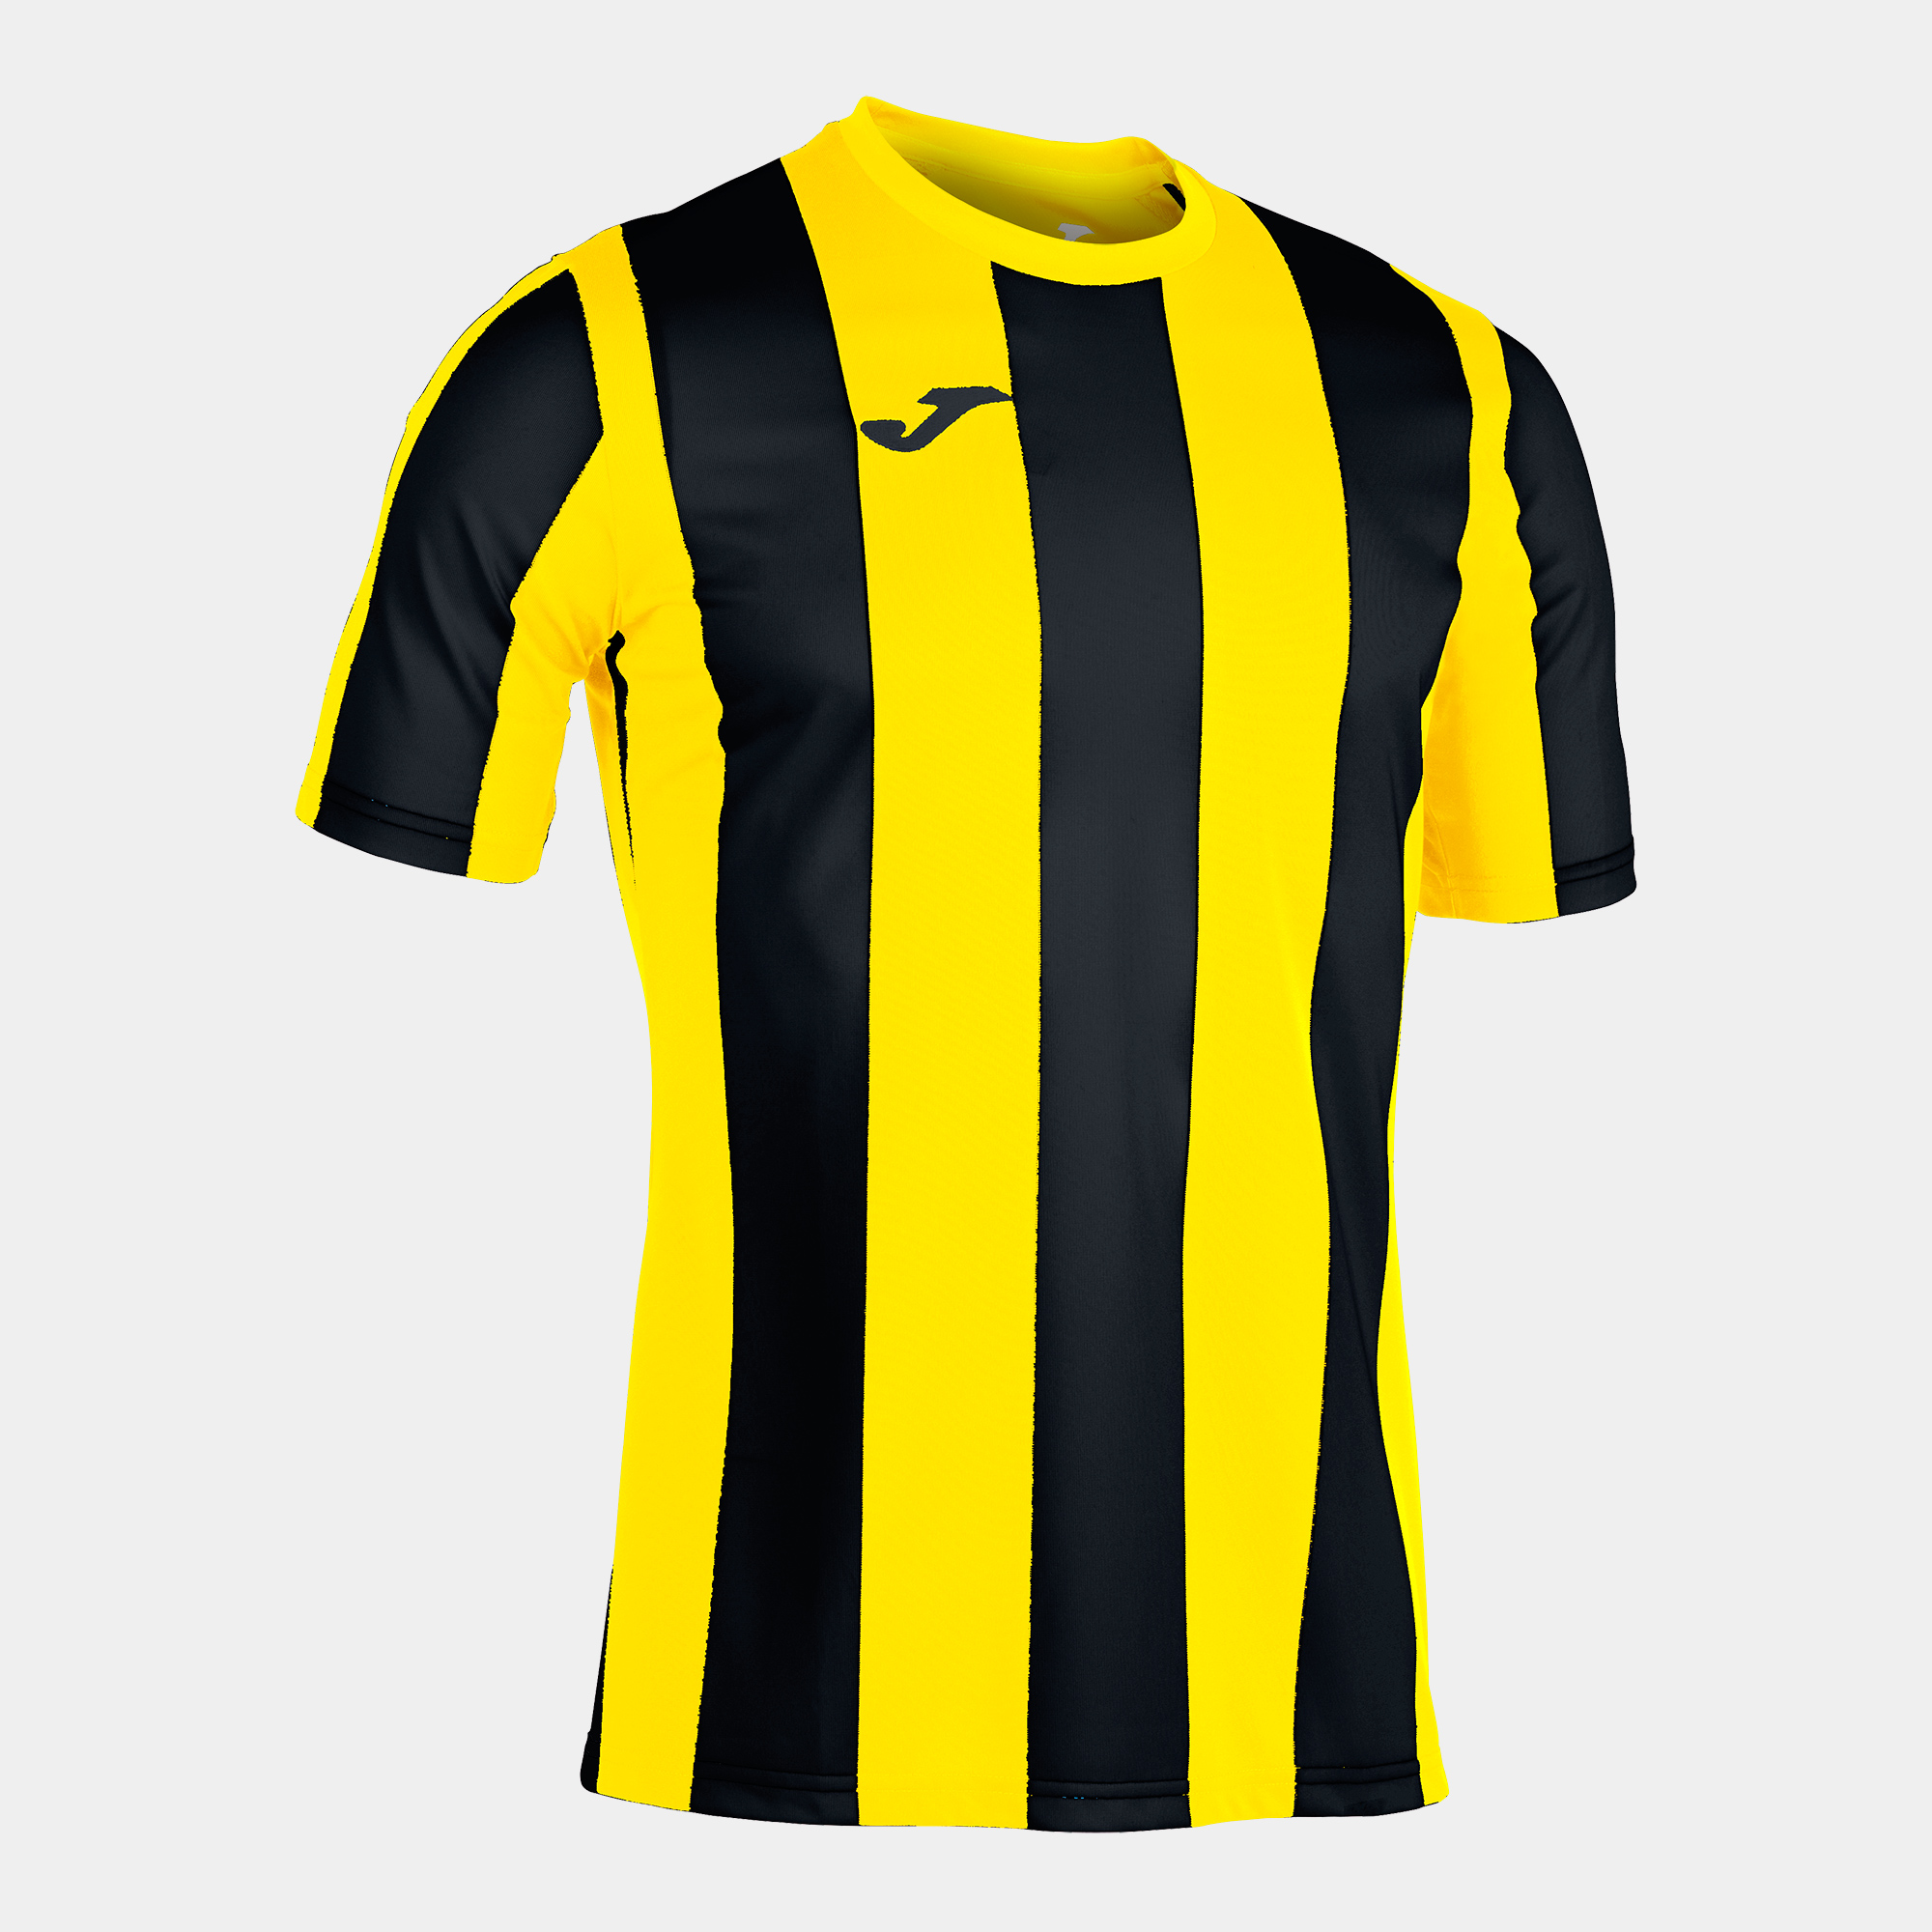 Camiseta Manga Corta Joma Inter Amarillo Negro